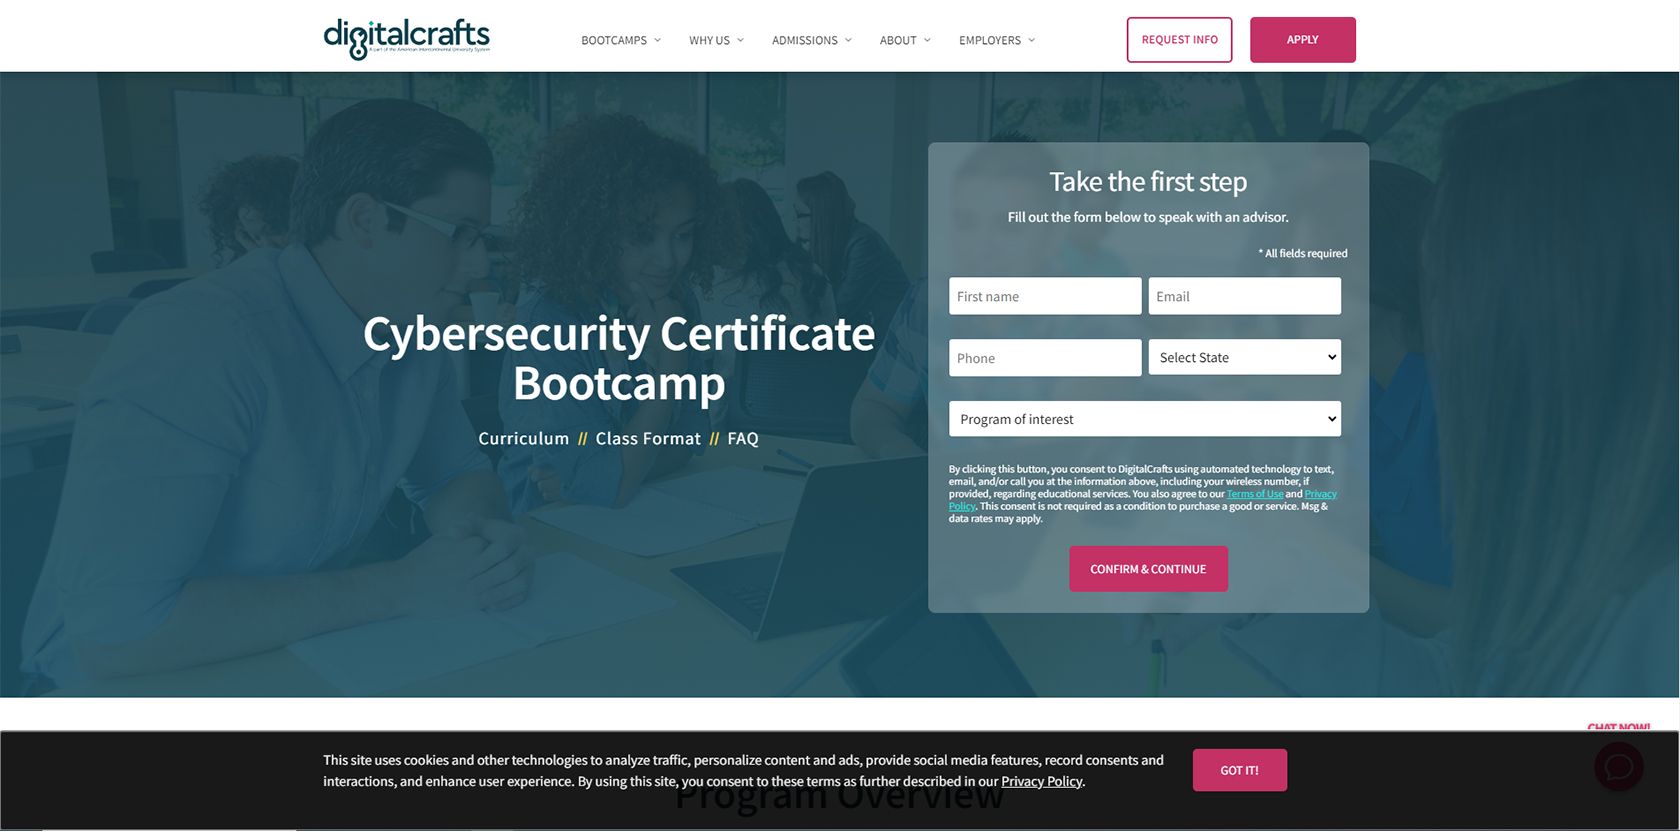 Digital Crafts' Cybersecurity Bootcamp